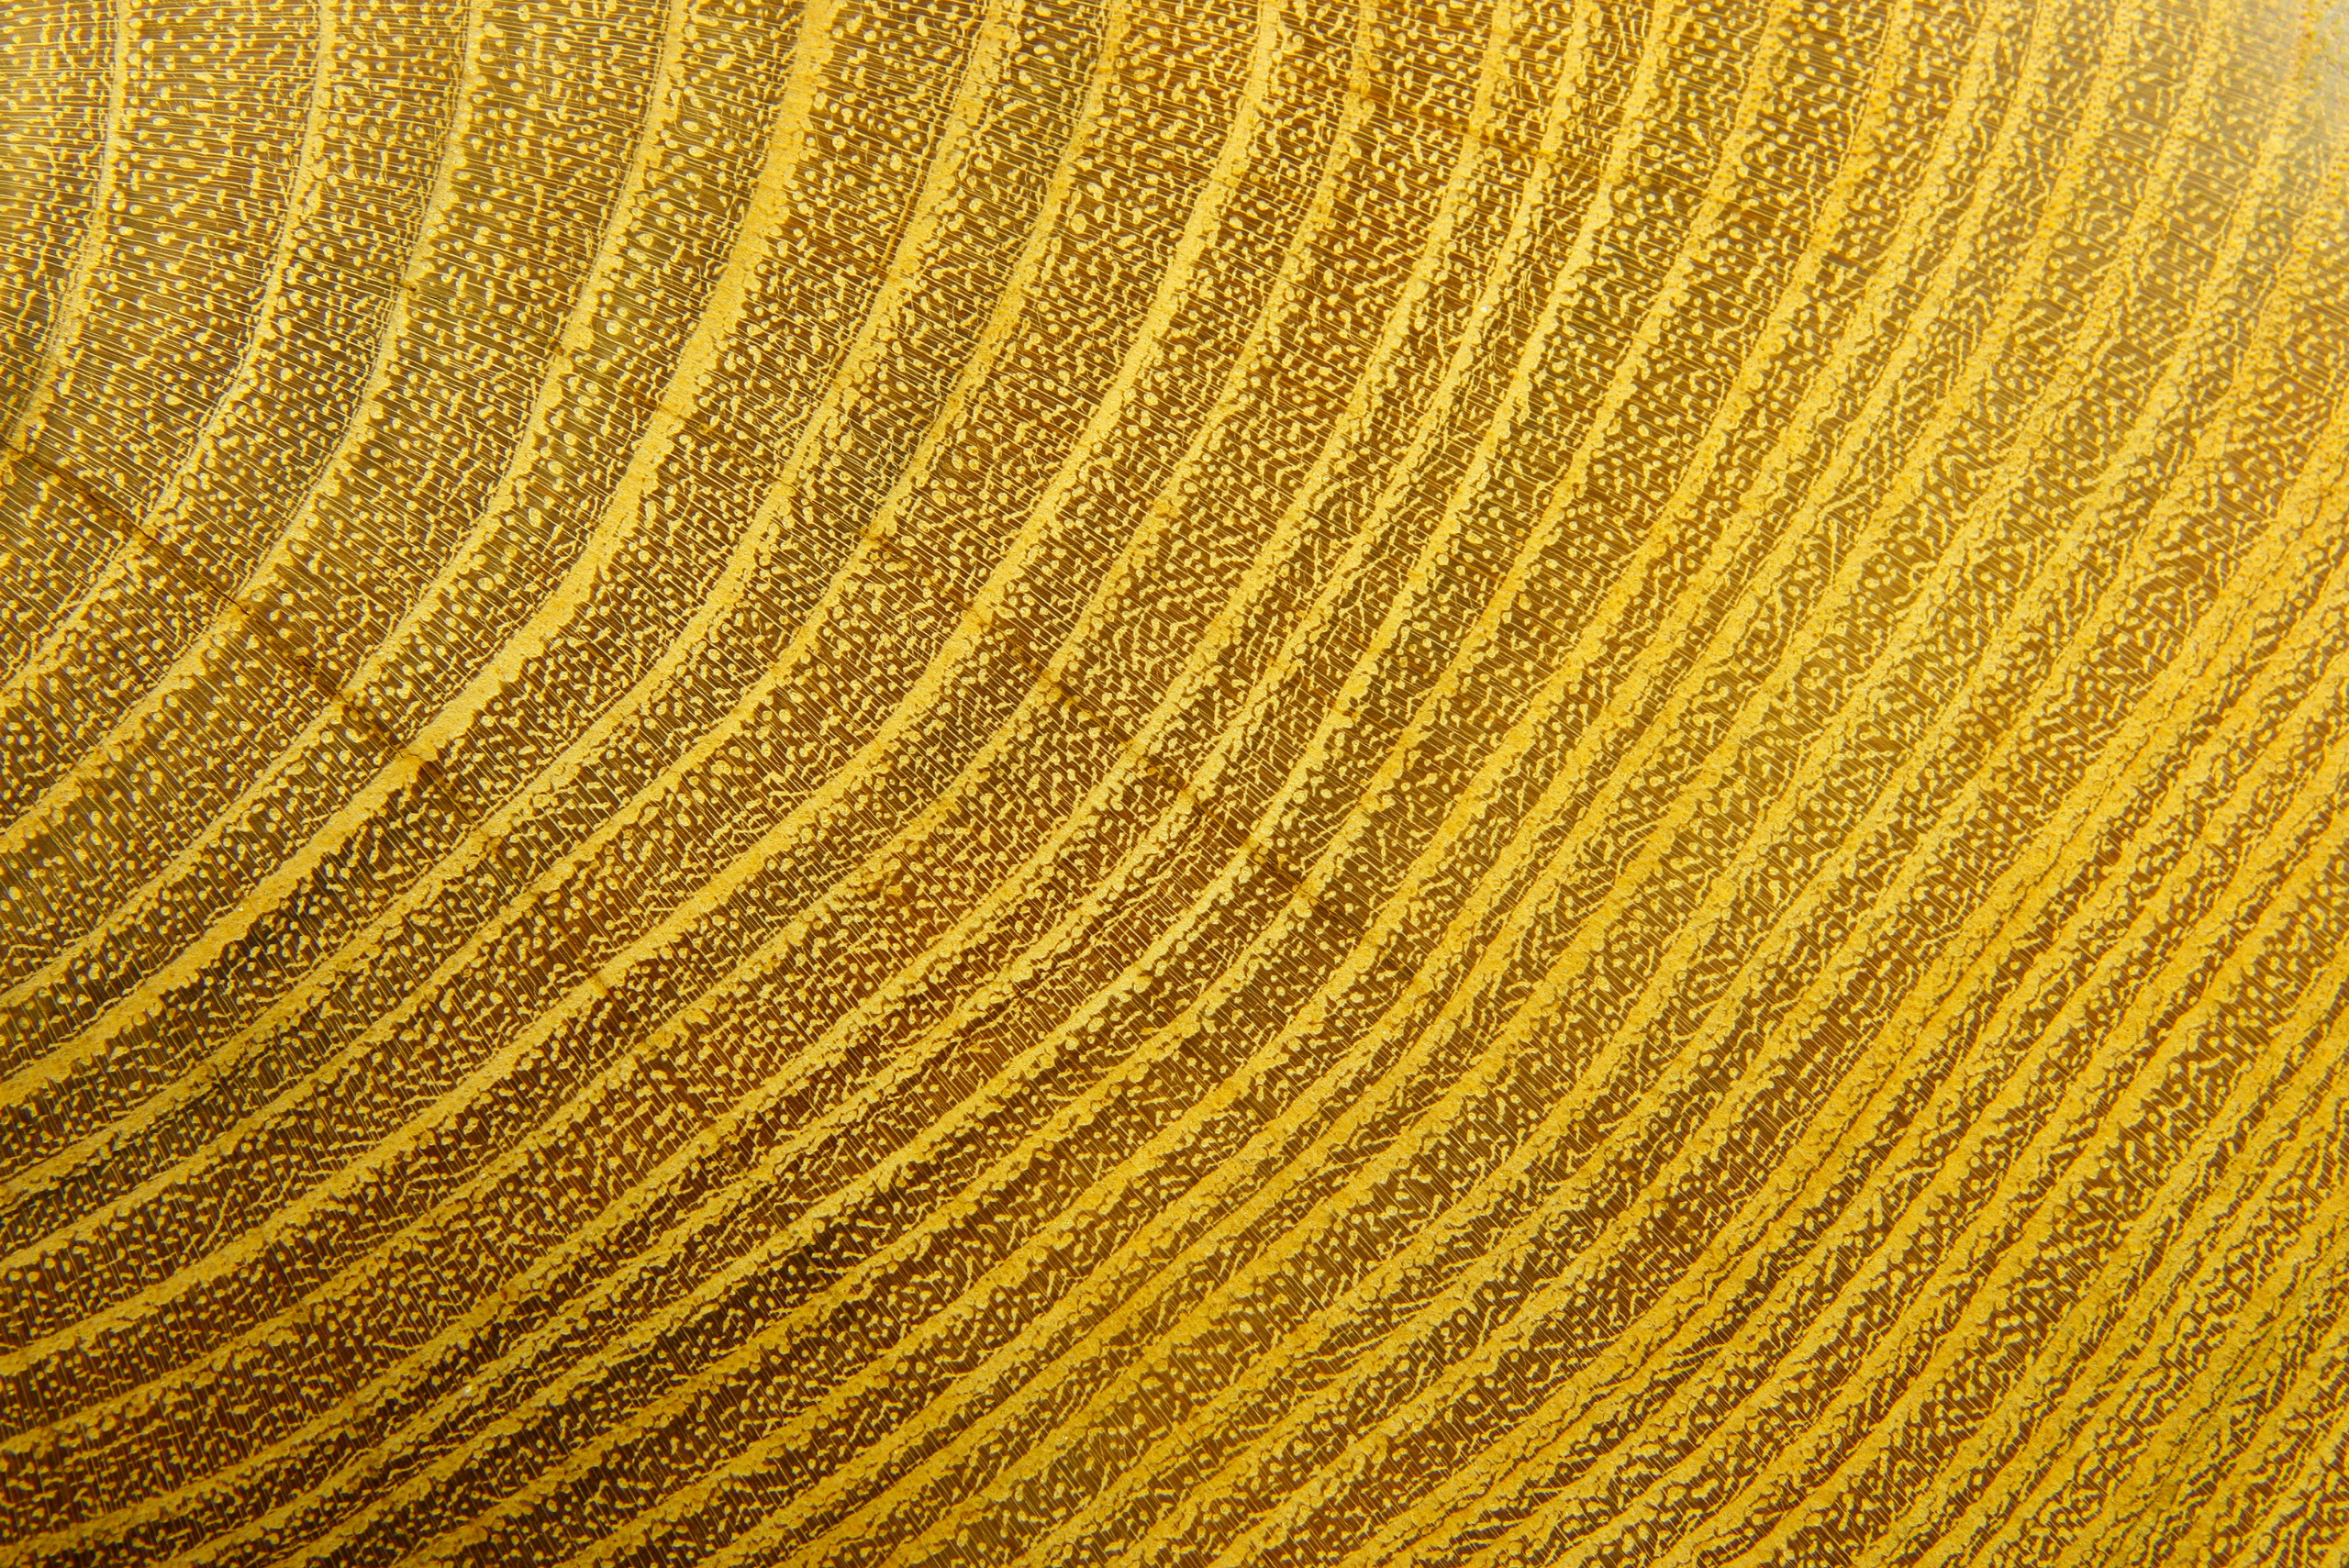 A closeup of the wood grain of an acacia tree.